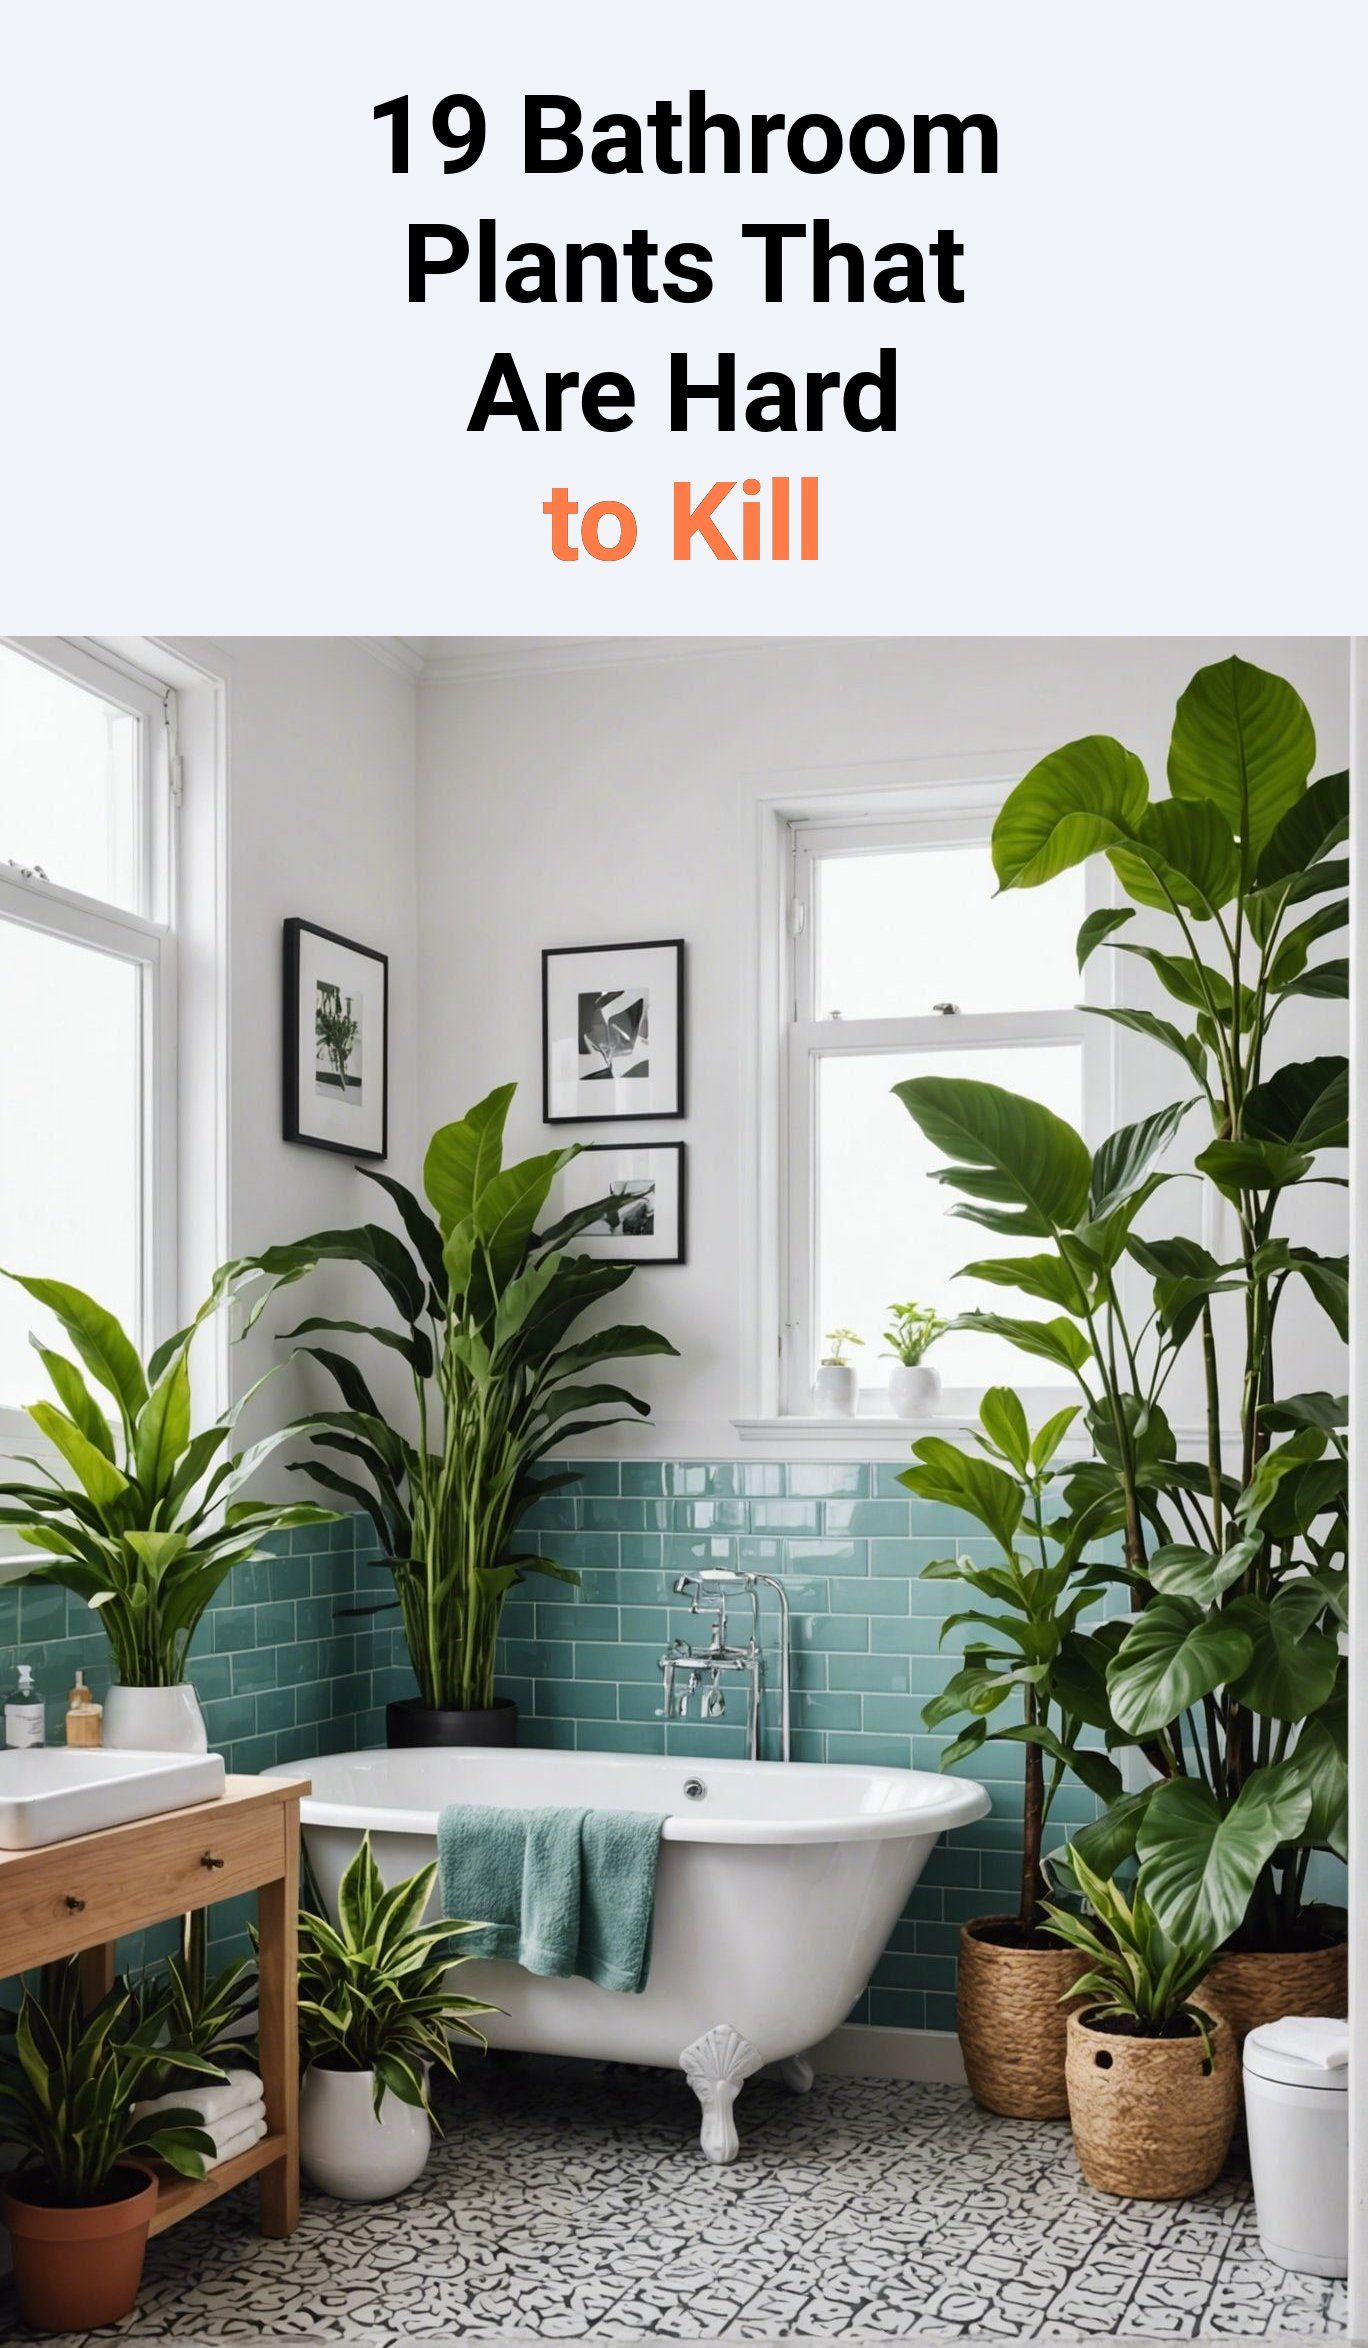 19 Bathroom Plants That Are Hard to Kill